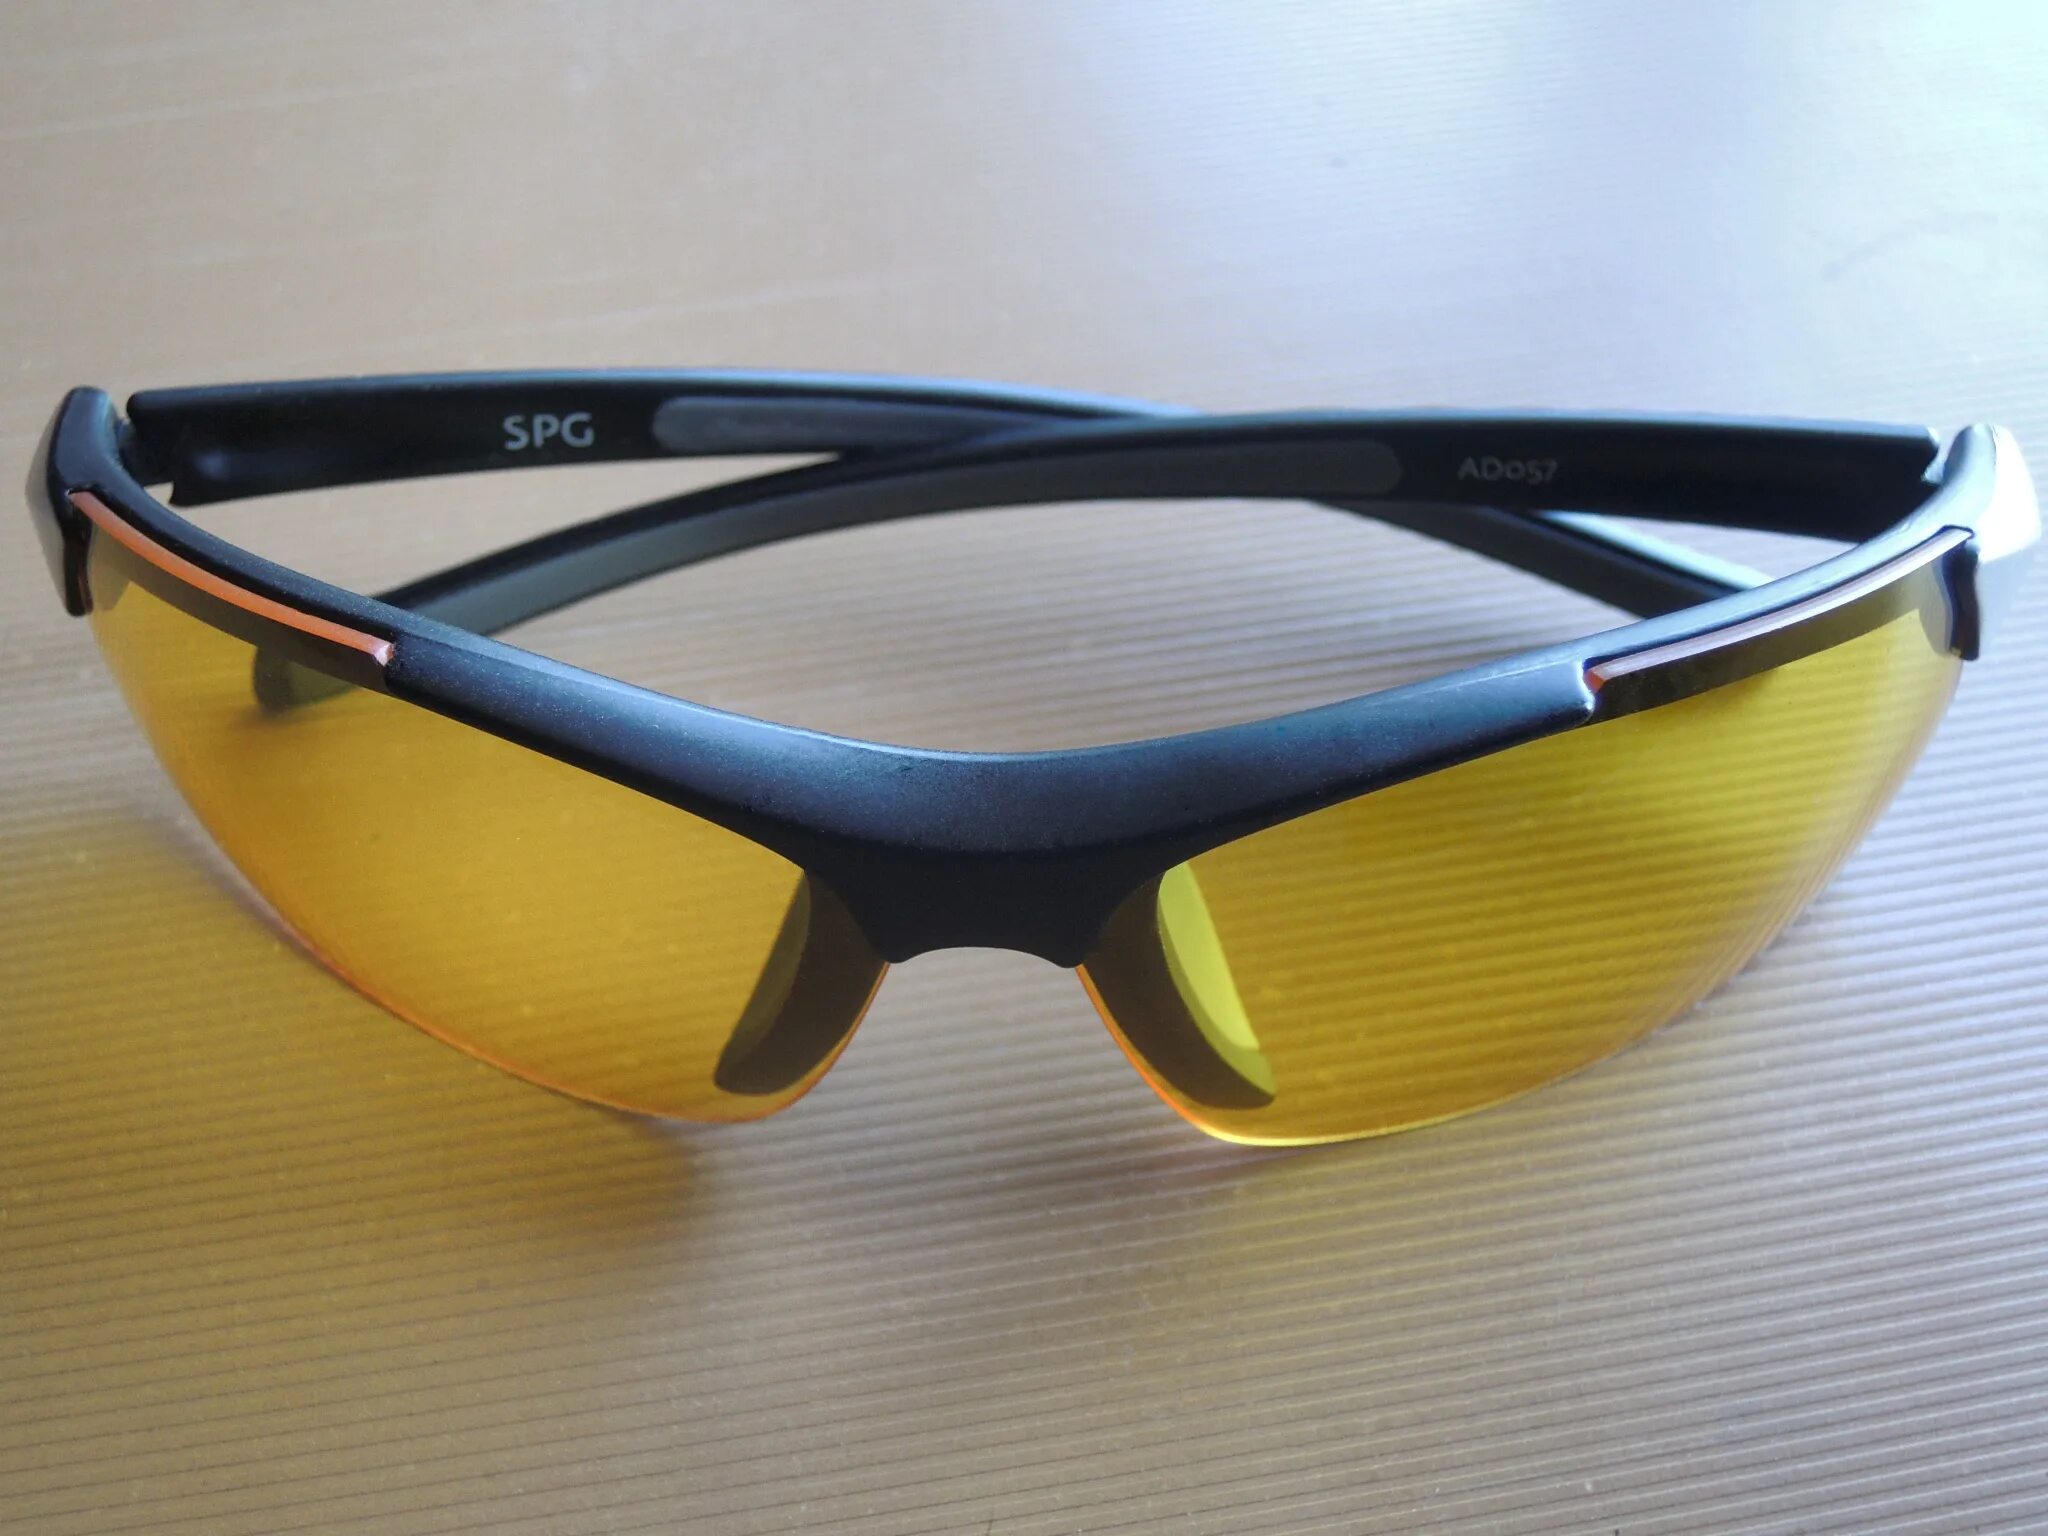 Лучшие антибликовые очки. Очки SPG Premium ad057 Black-Silver. Очки SPG ac002 антифары Black. Очки защитные SP Glasses ad017 Comfort. Очки водительские SP Glasses ad024 Premium, Black.